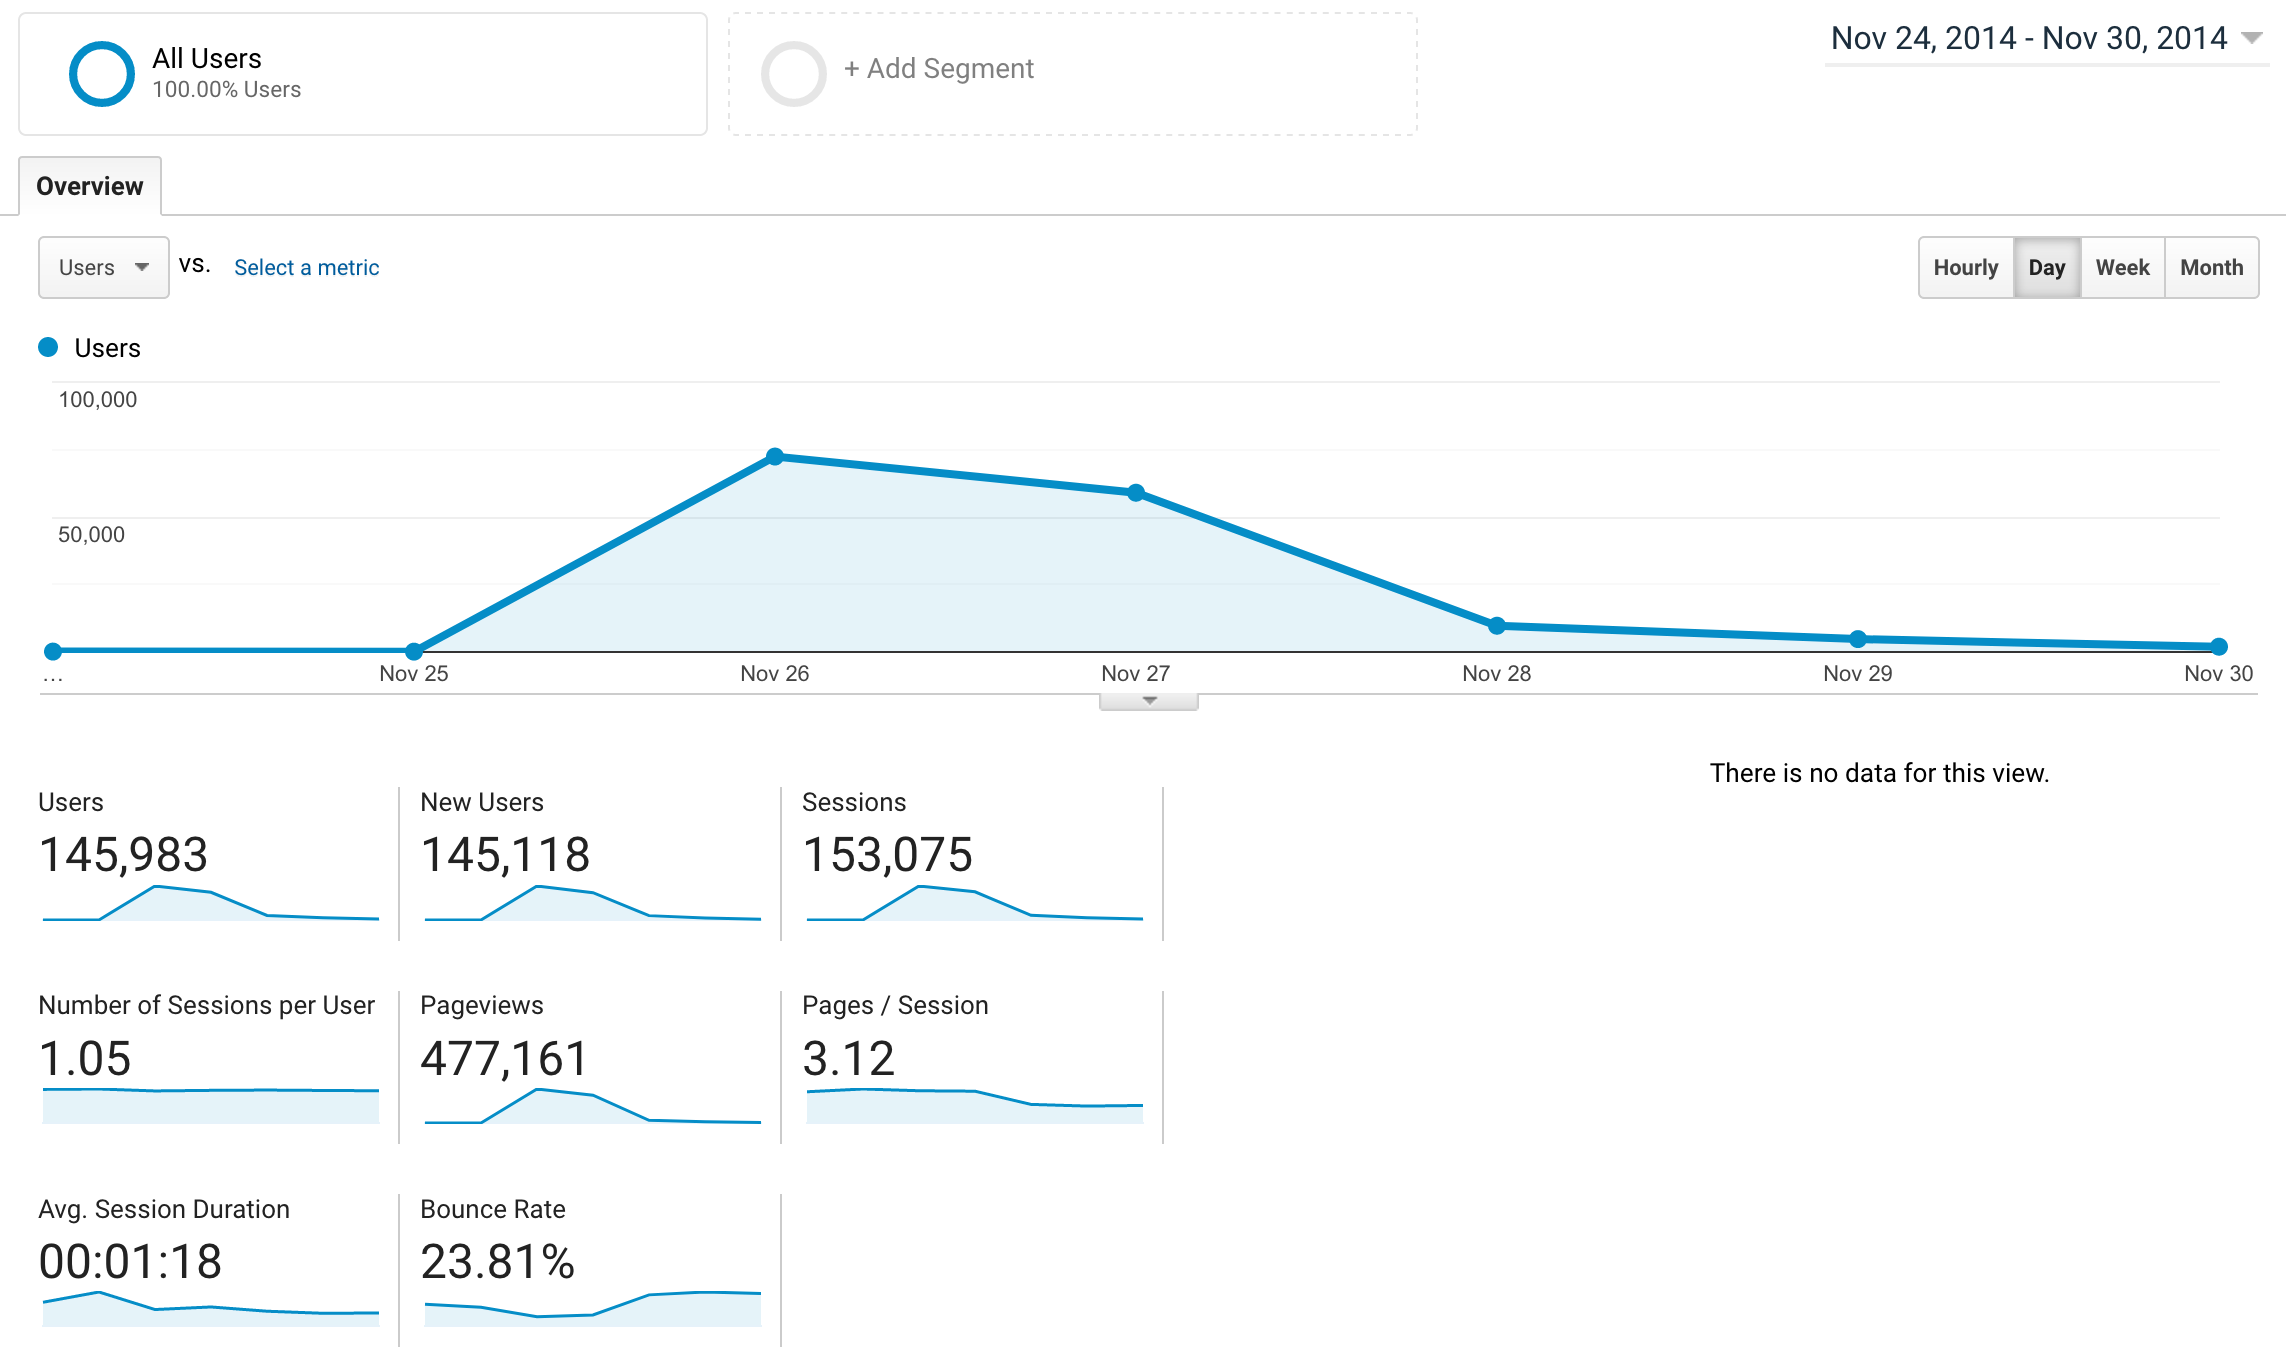 google analytics screenshot showing traffic results from November 25th, 2014 to November 30th 2014